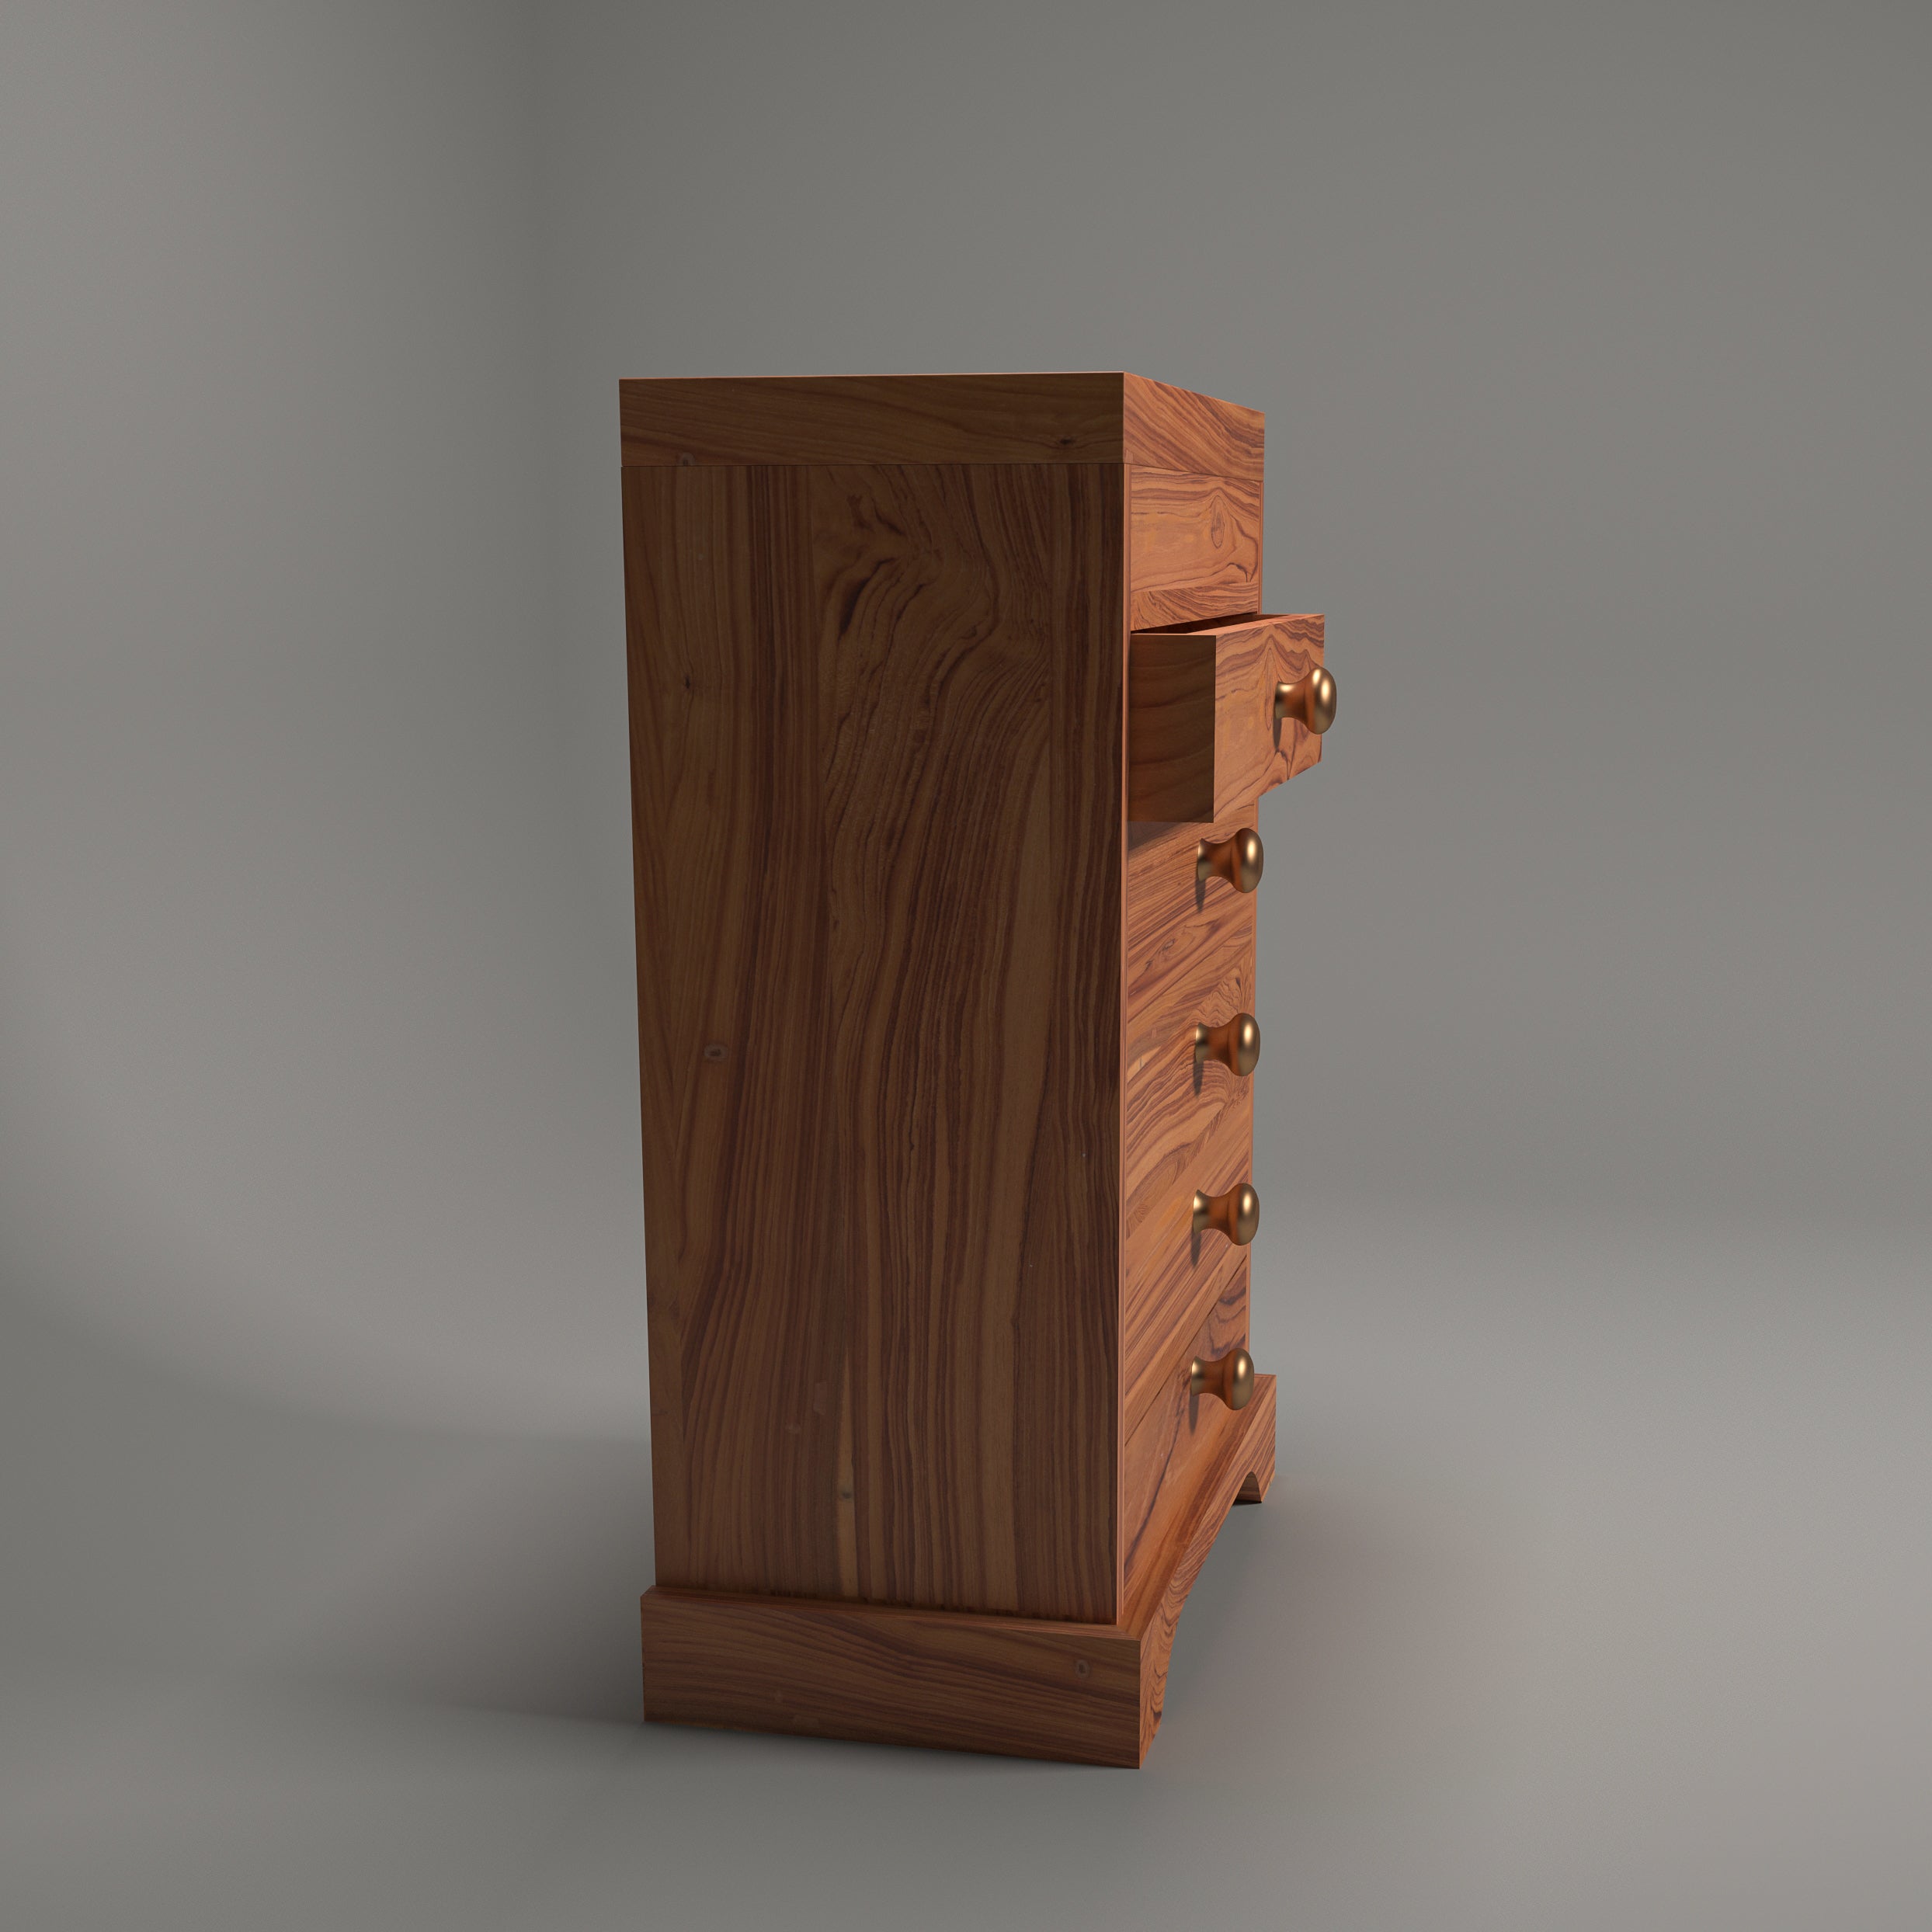 Teak wood 6 compartment compact Jewellery Box Desk Organizer